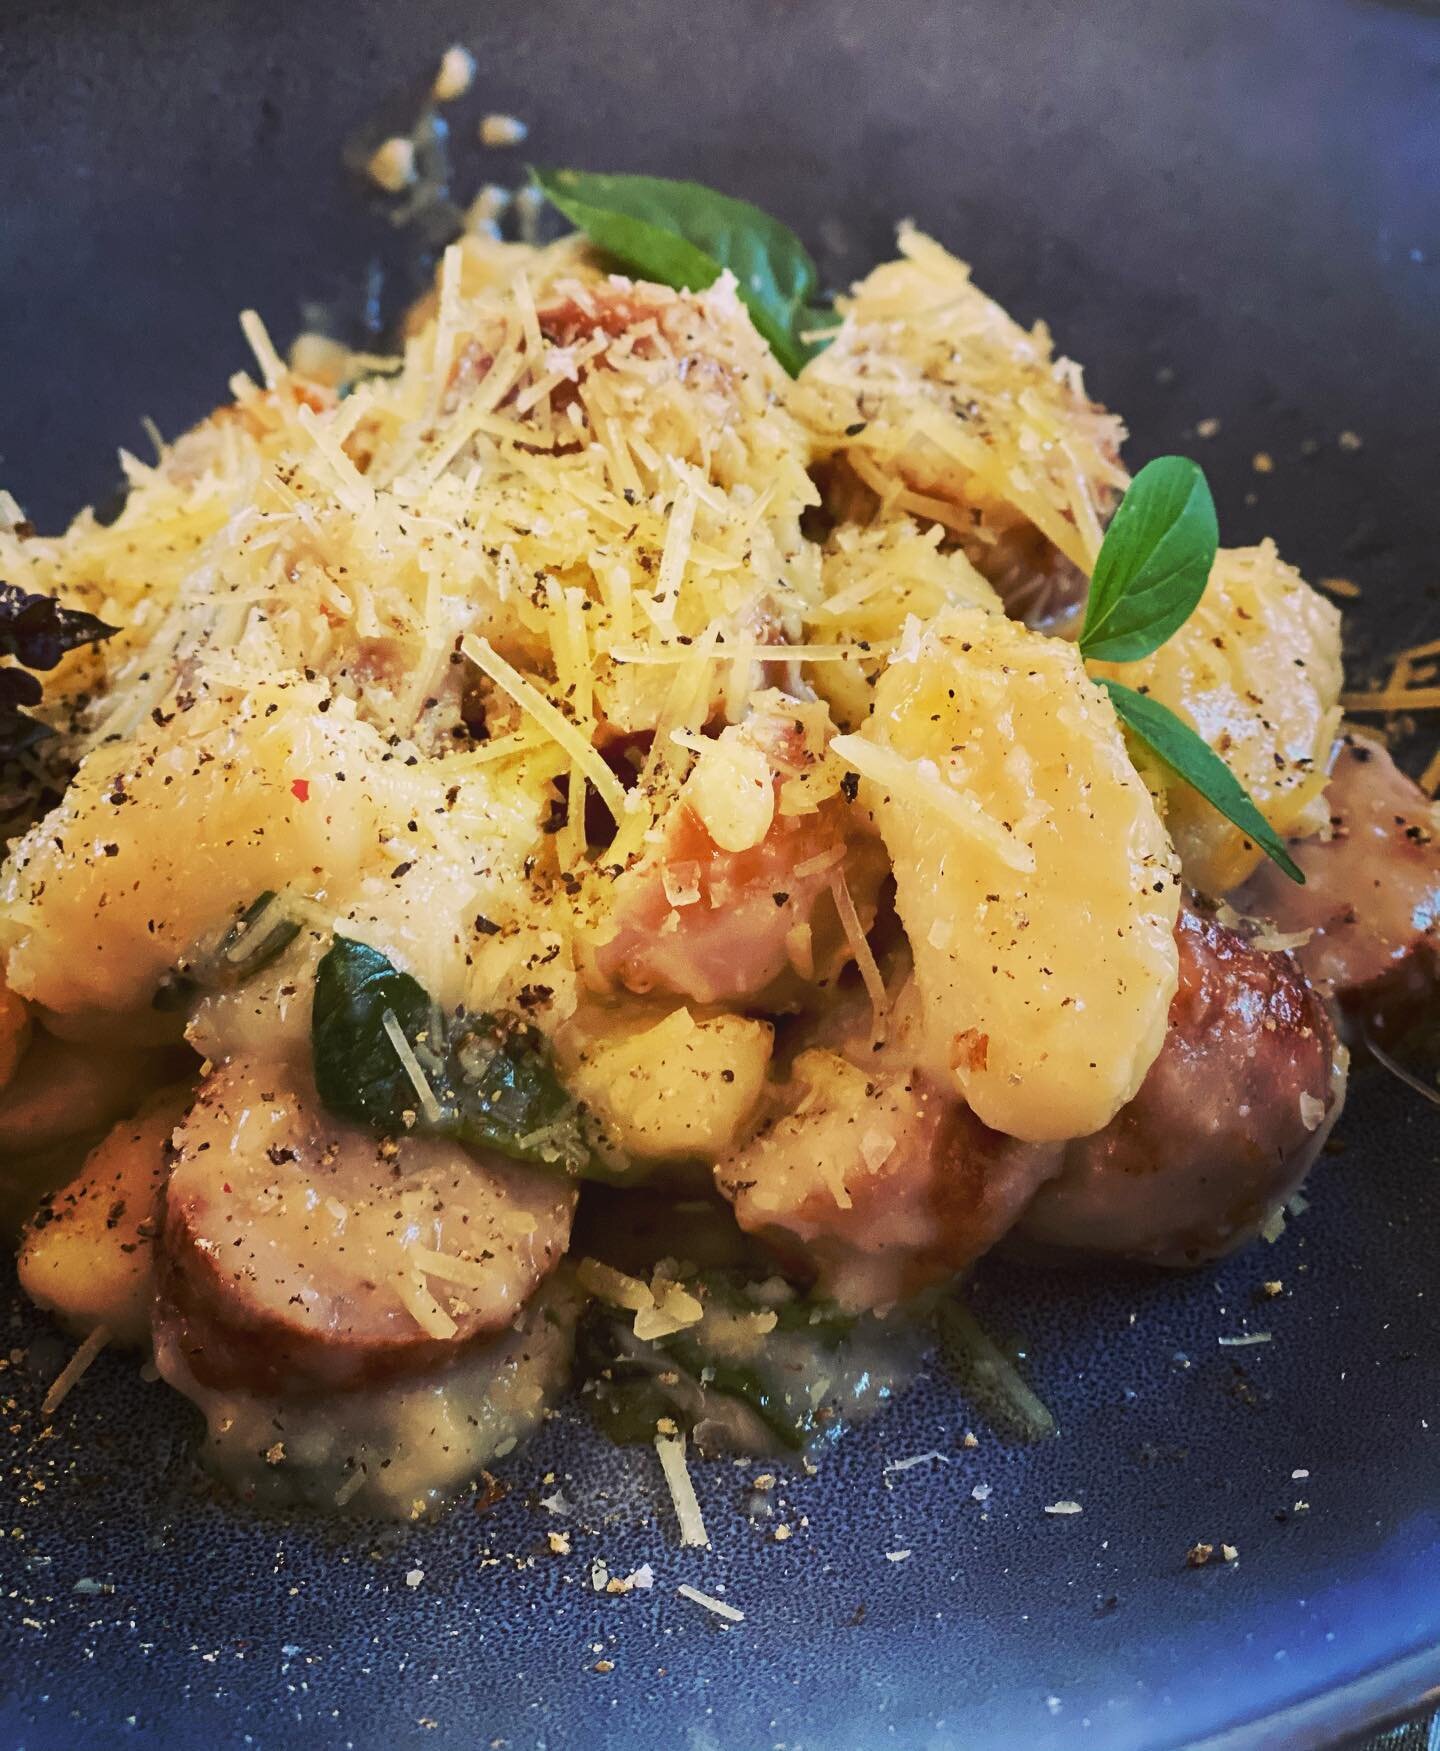 Cheesy #gnocchi with #sausage and #spinach 
#denigolfresort #visitdeni @visitdeni